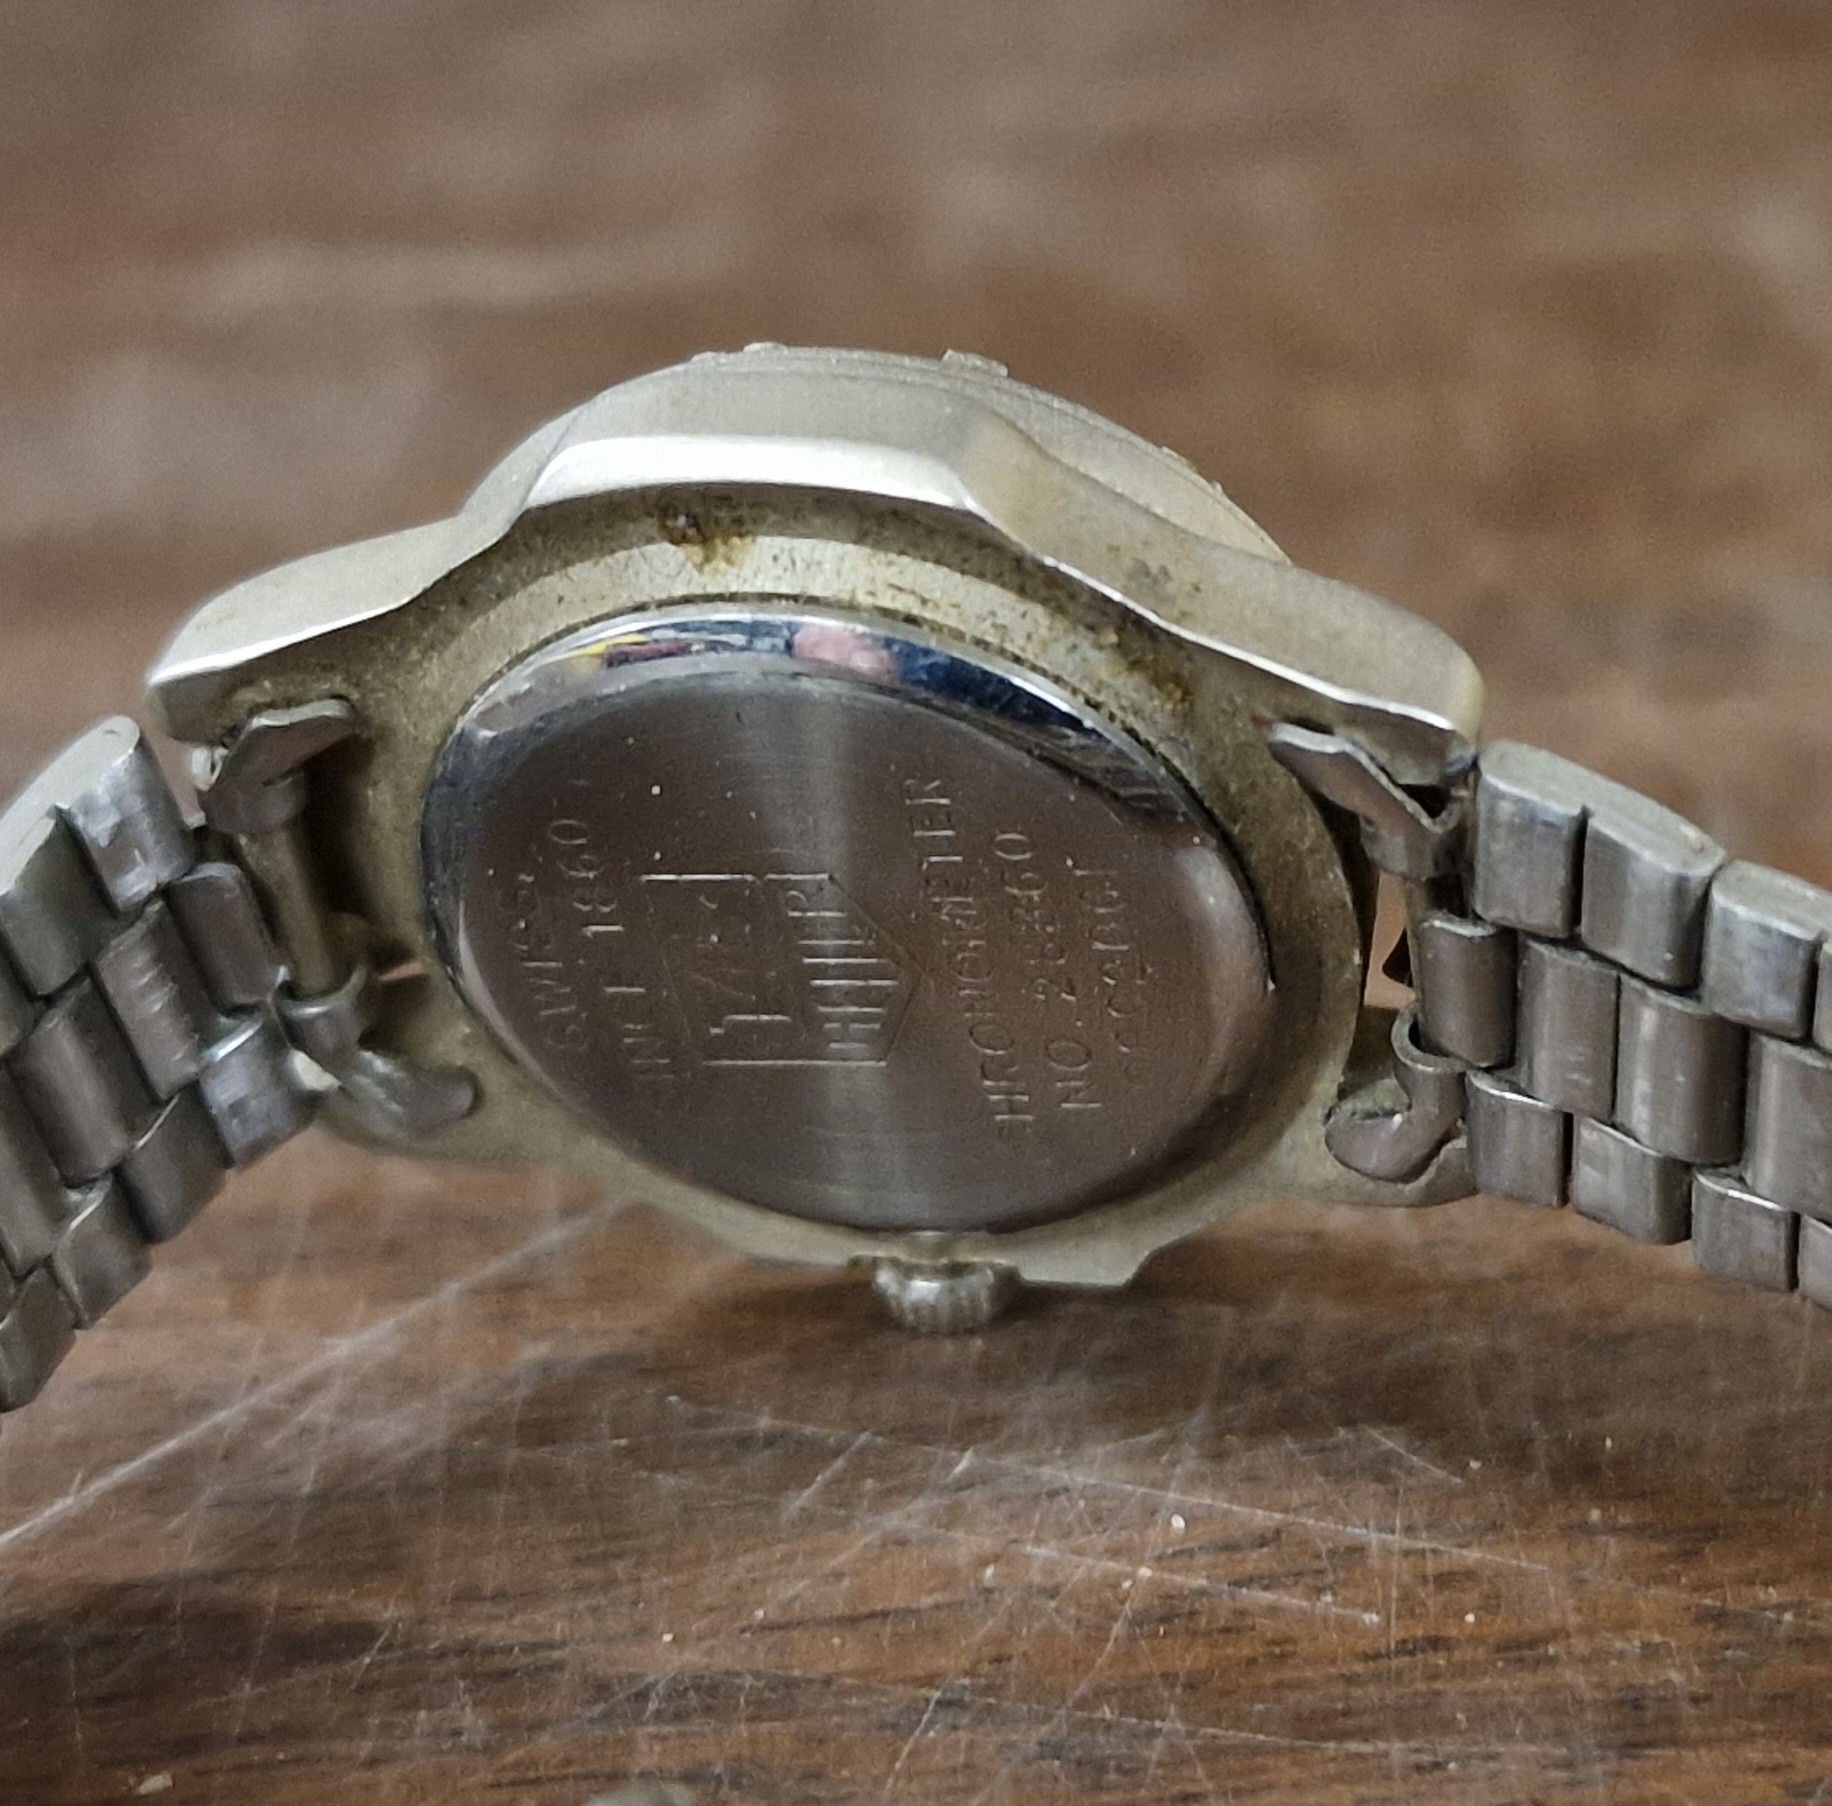 Tag Heuer chronometer (no'28360) professional diver series, 200 mtr ...